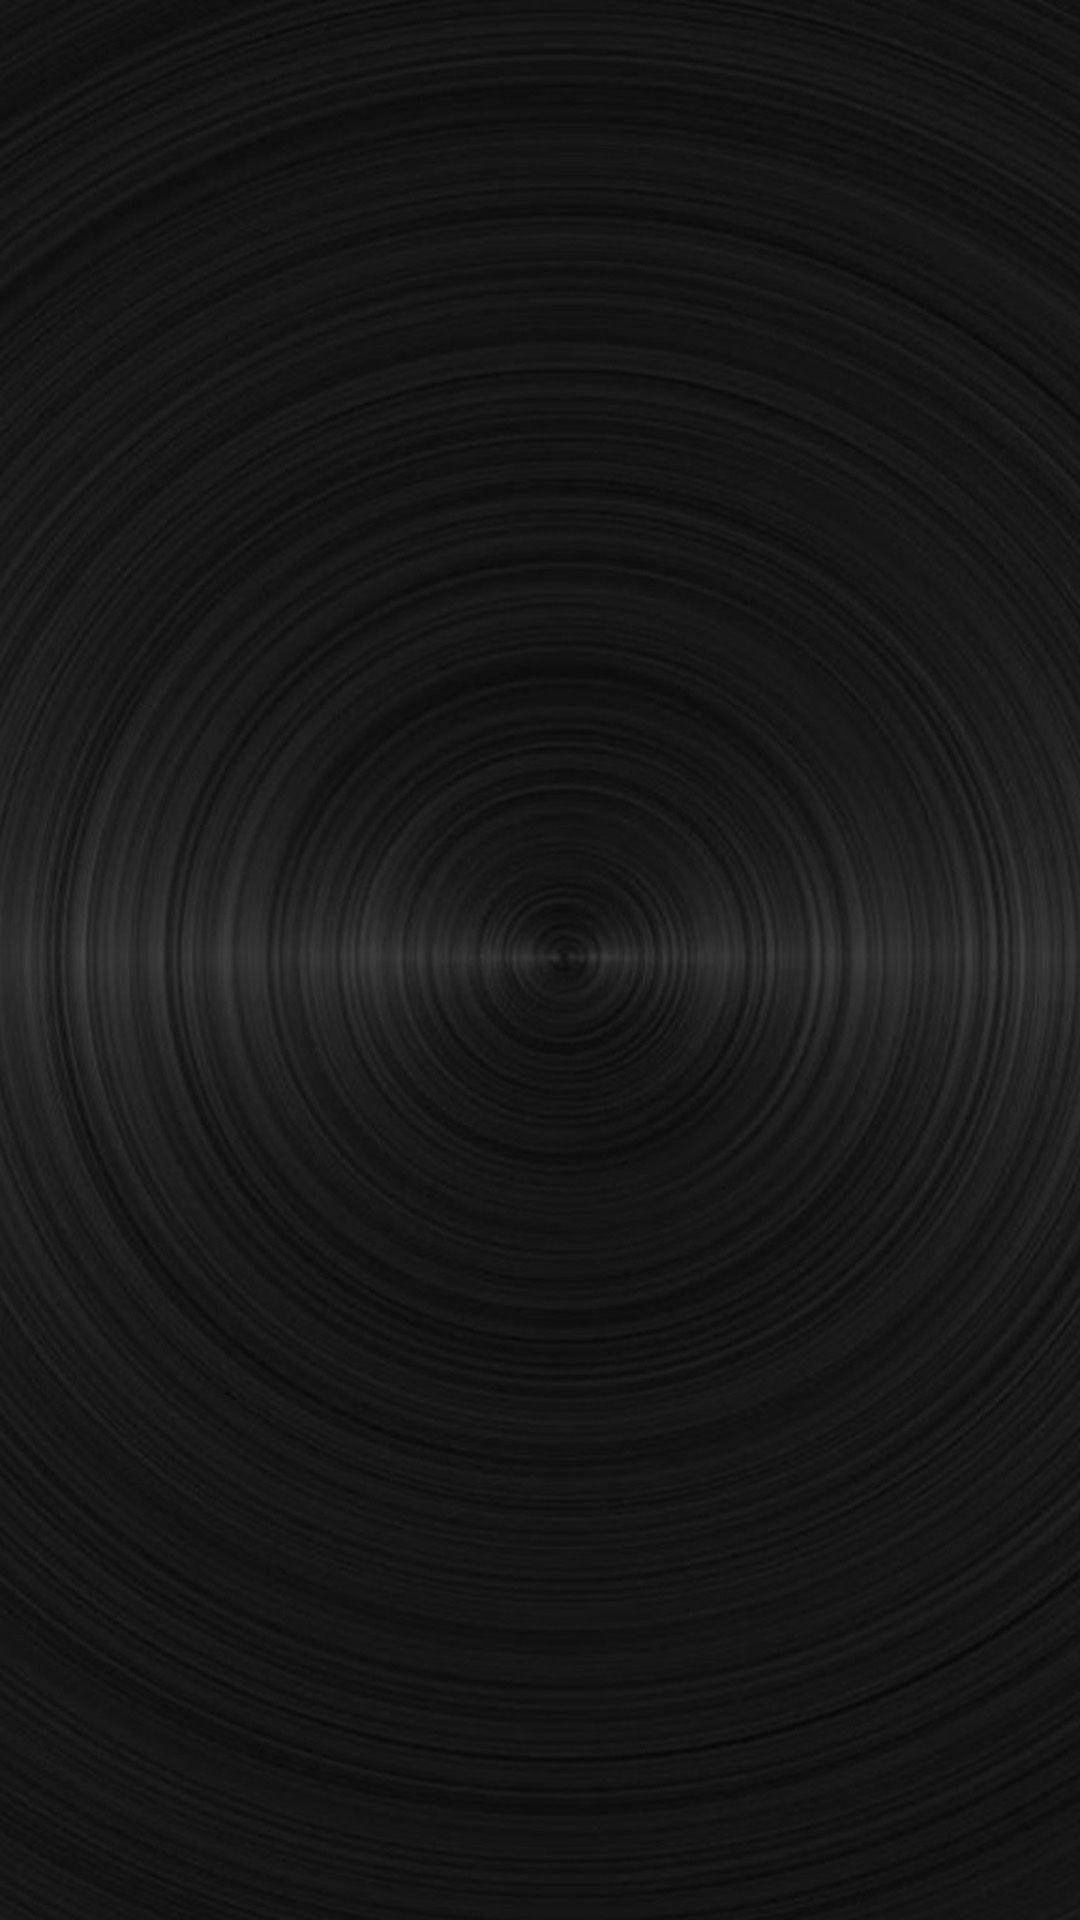 Stylish Black Spinning Disk Wallpaper